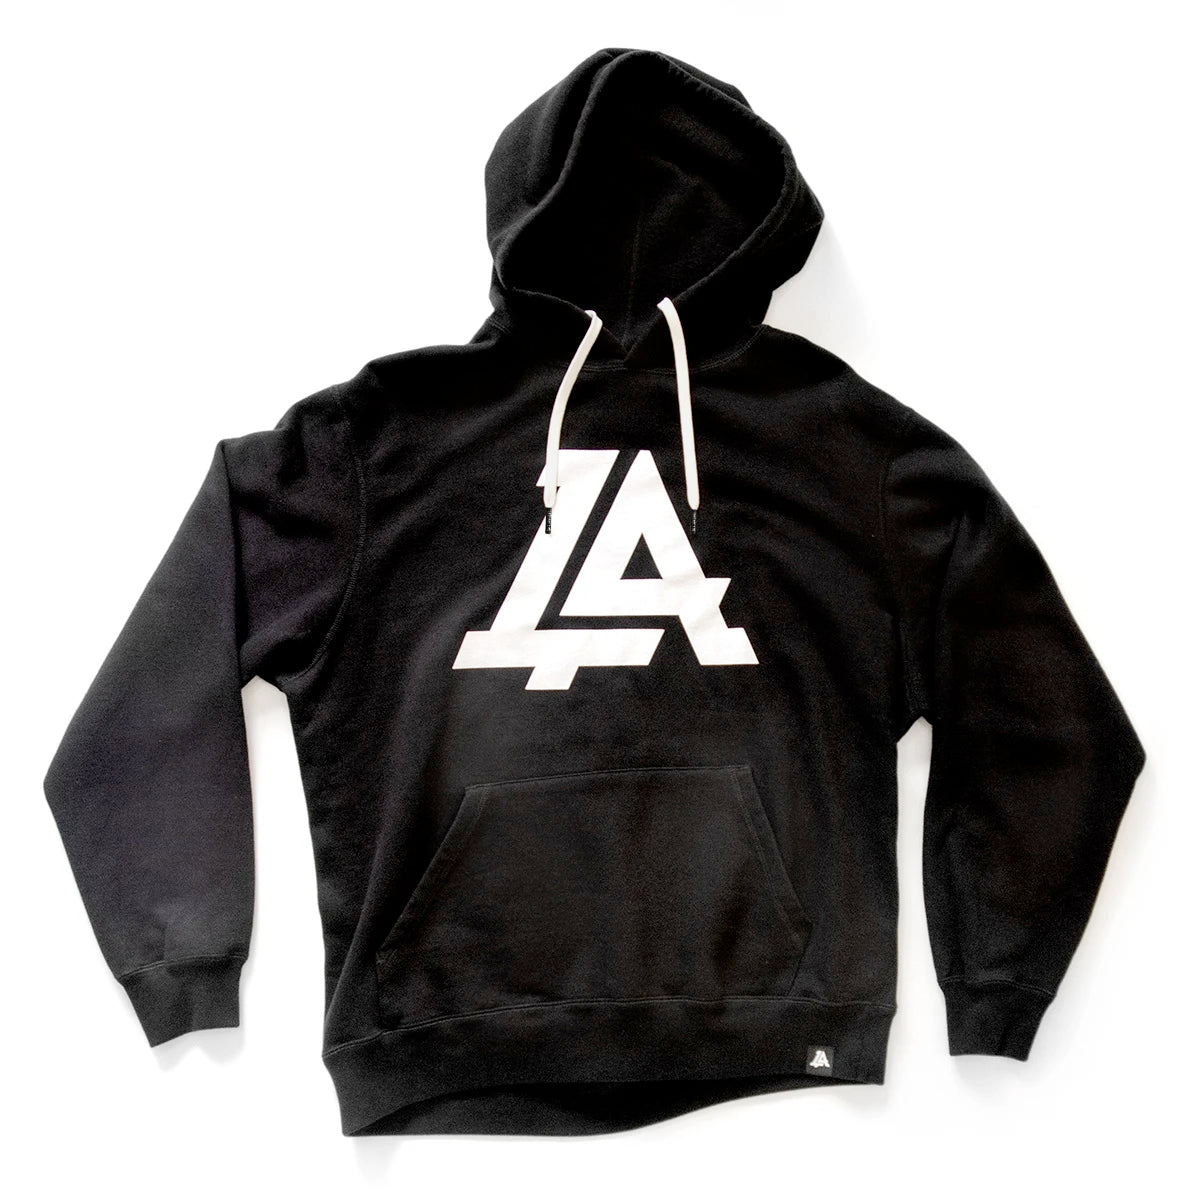 Lost Art Canada - black icon hoodie sweatshirt front view white strings